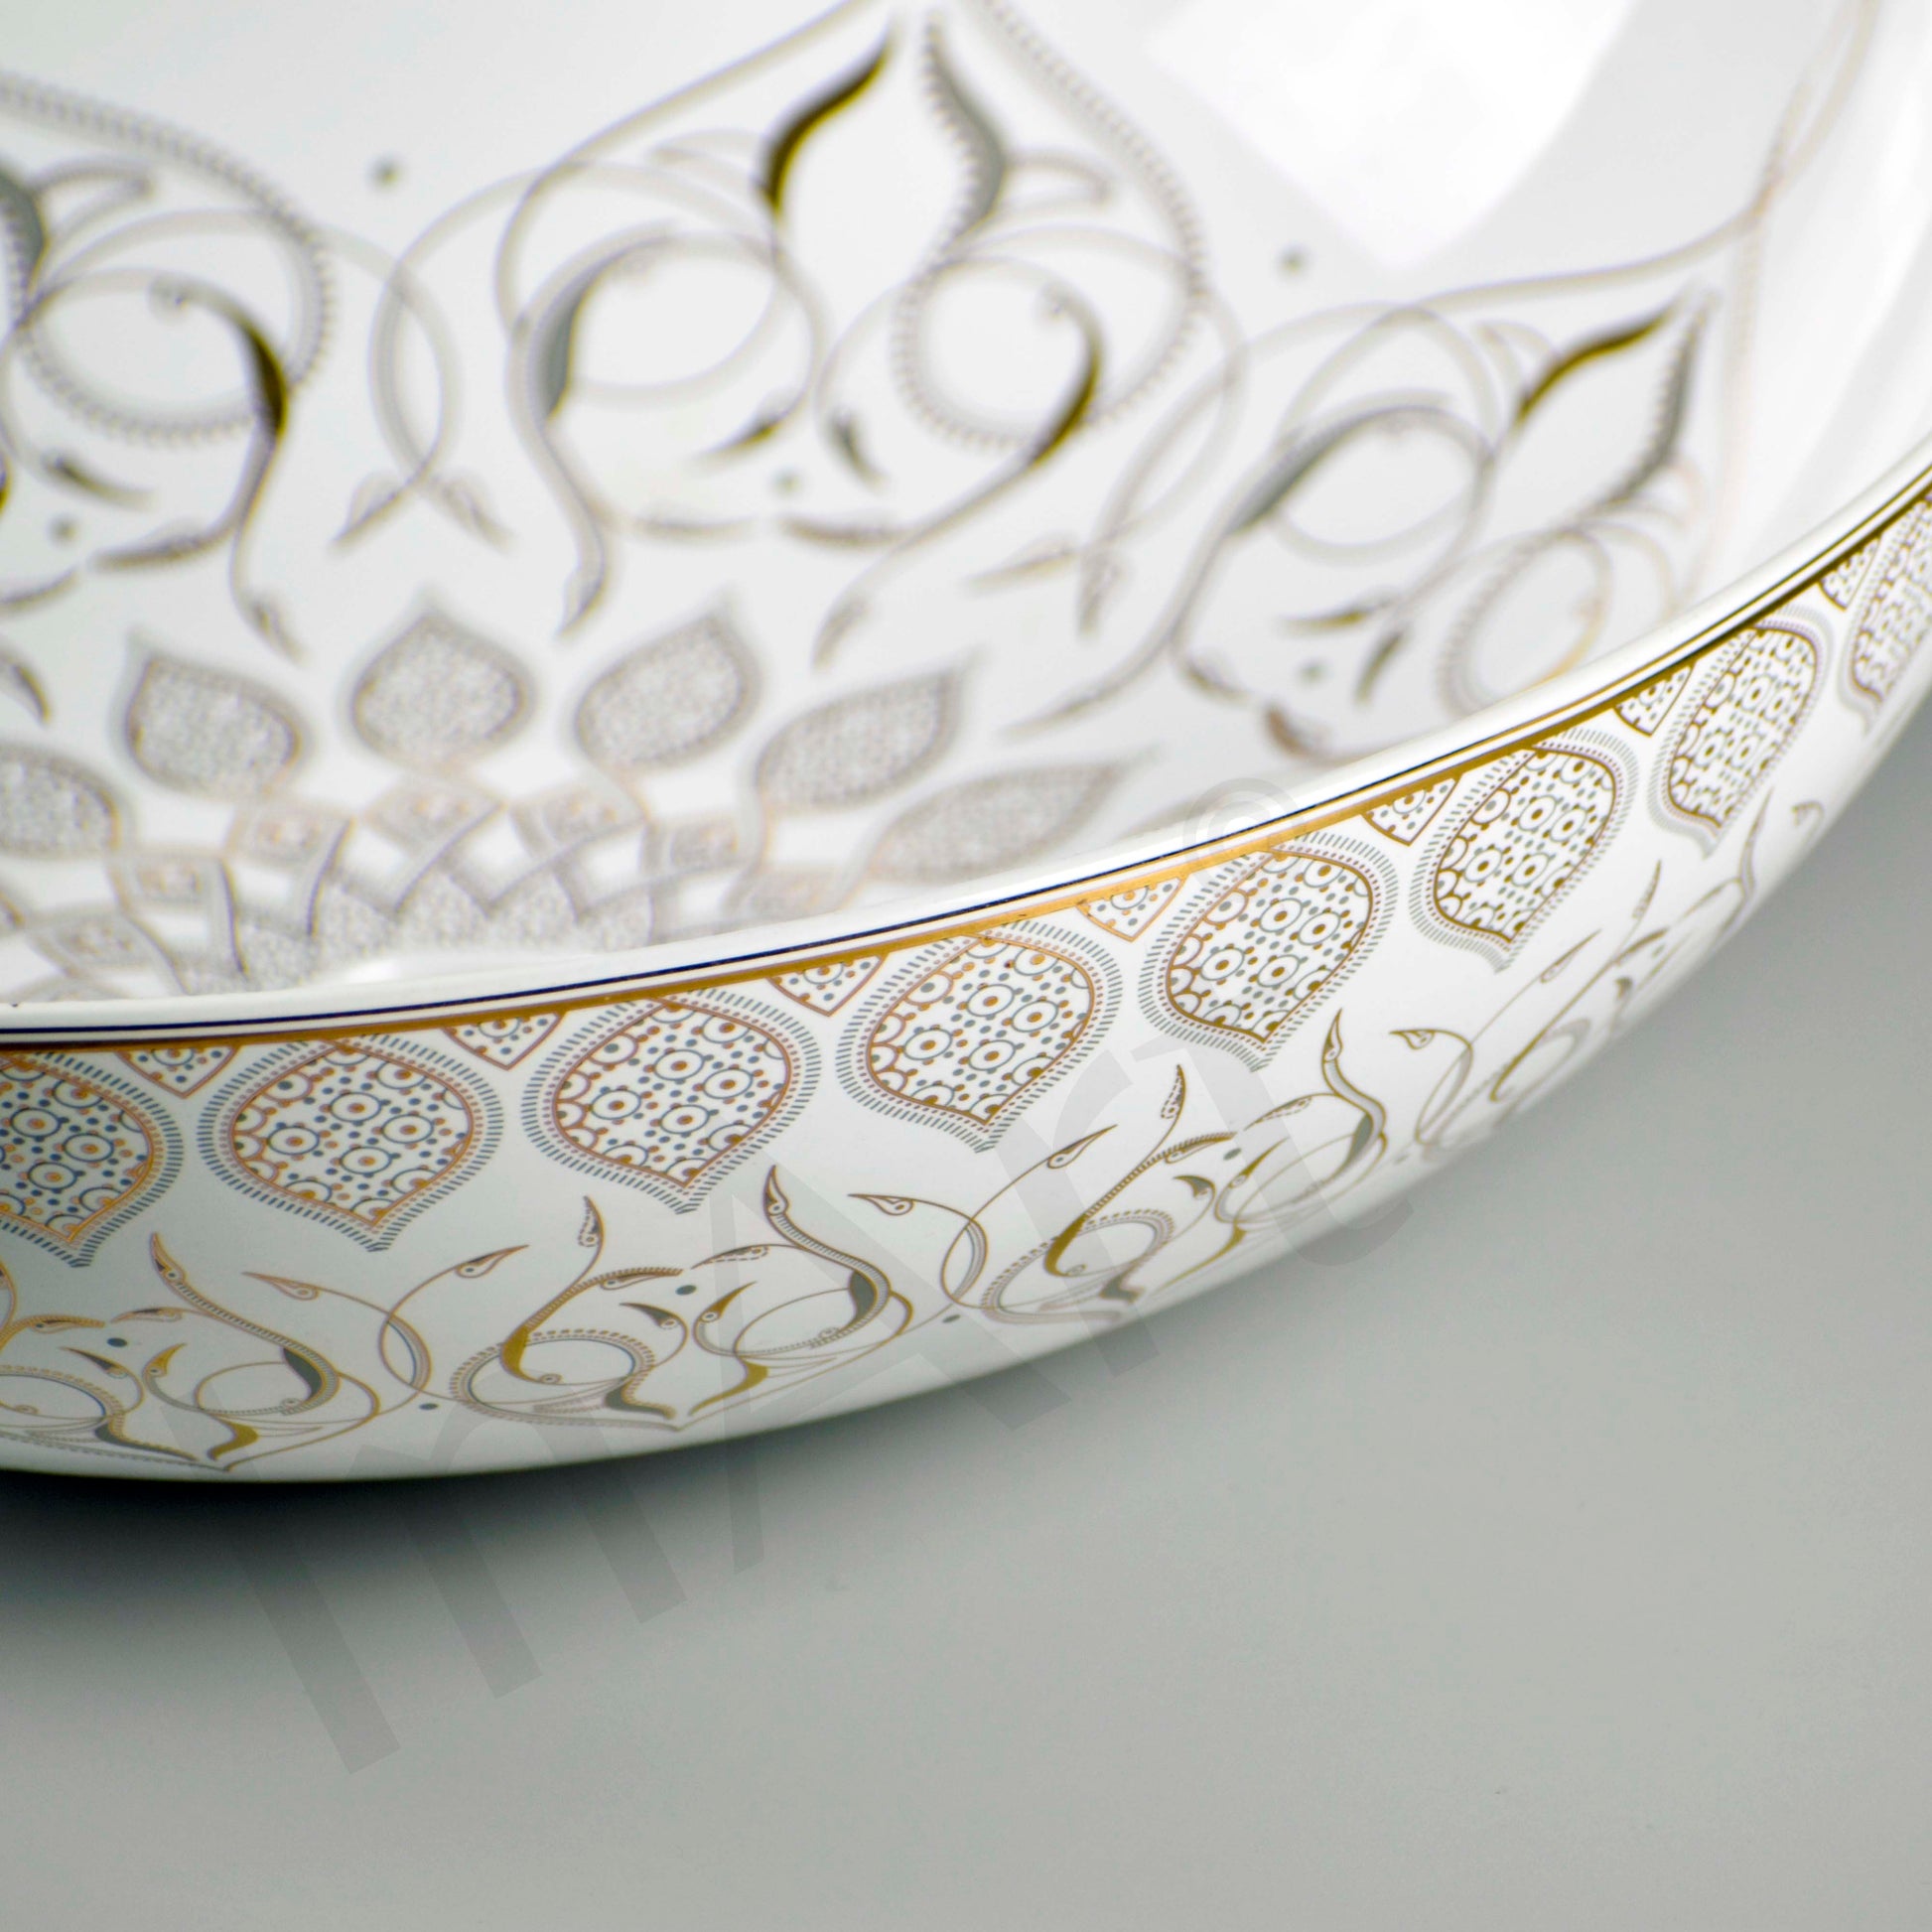 InArt Modern Table Top Wash Basin 40 x 40 CM White Gold Design - InArt-Studio